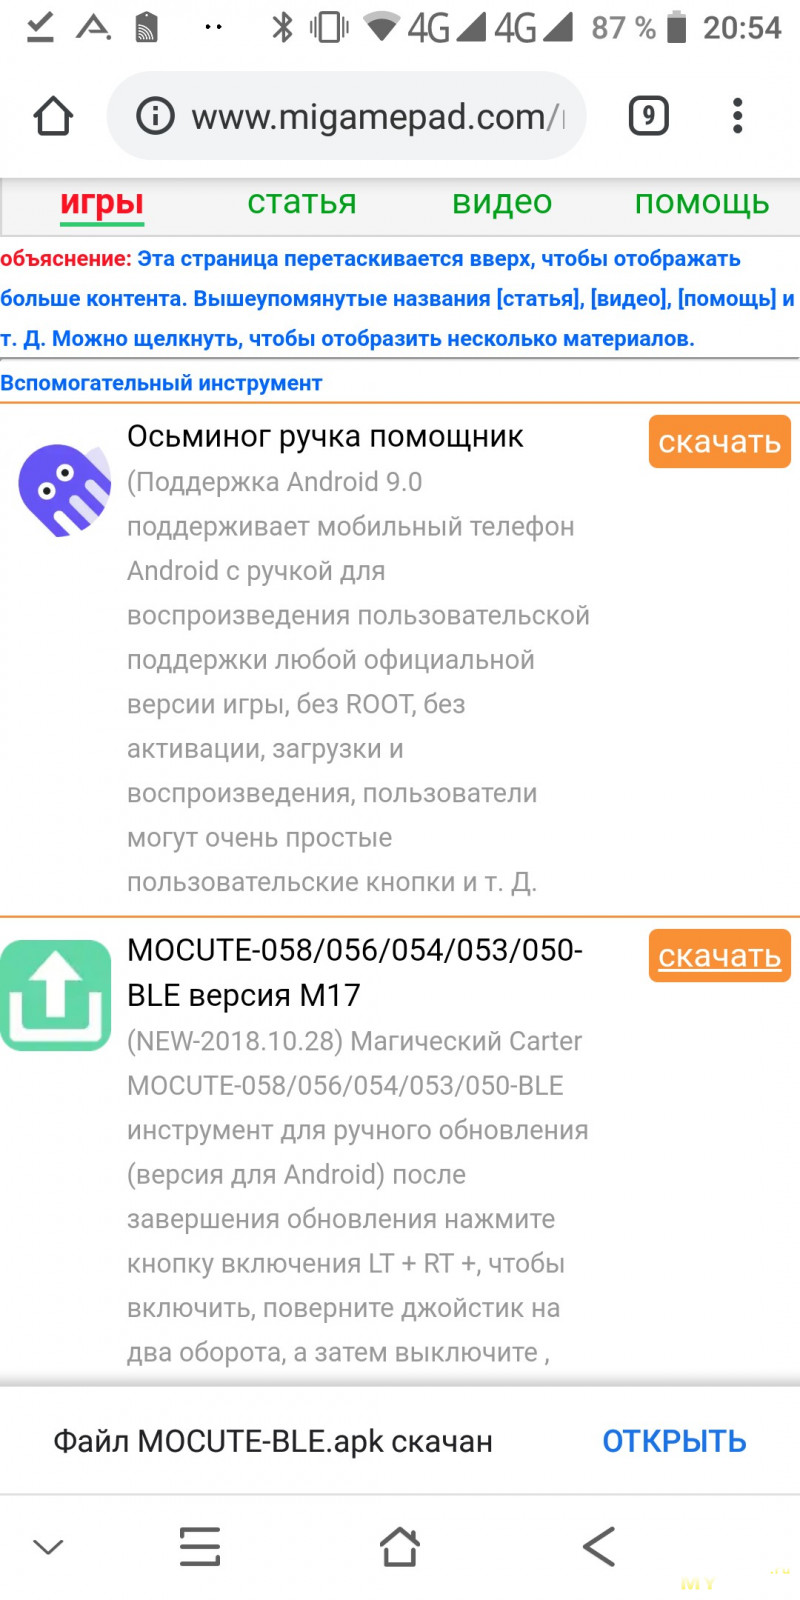 Bluetooth геймпад Mocute-054